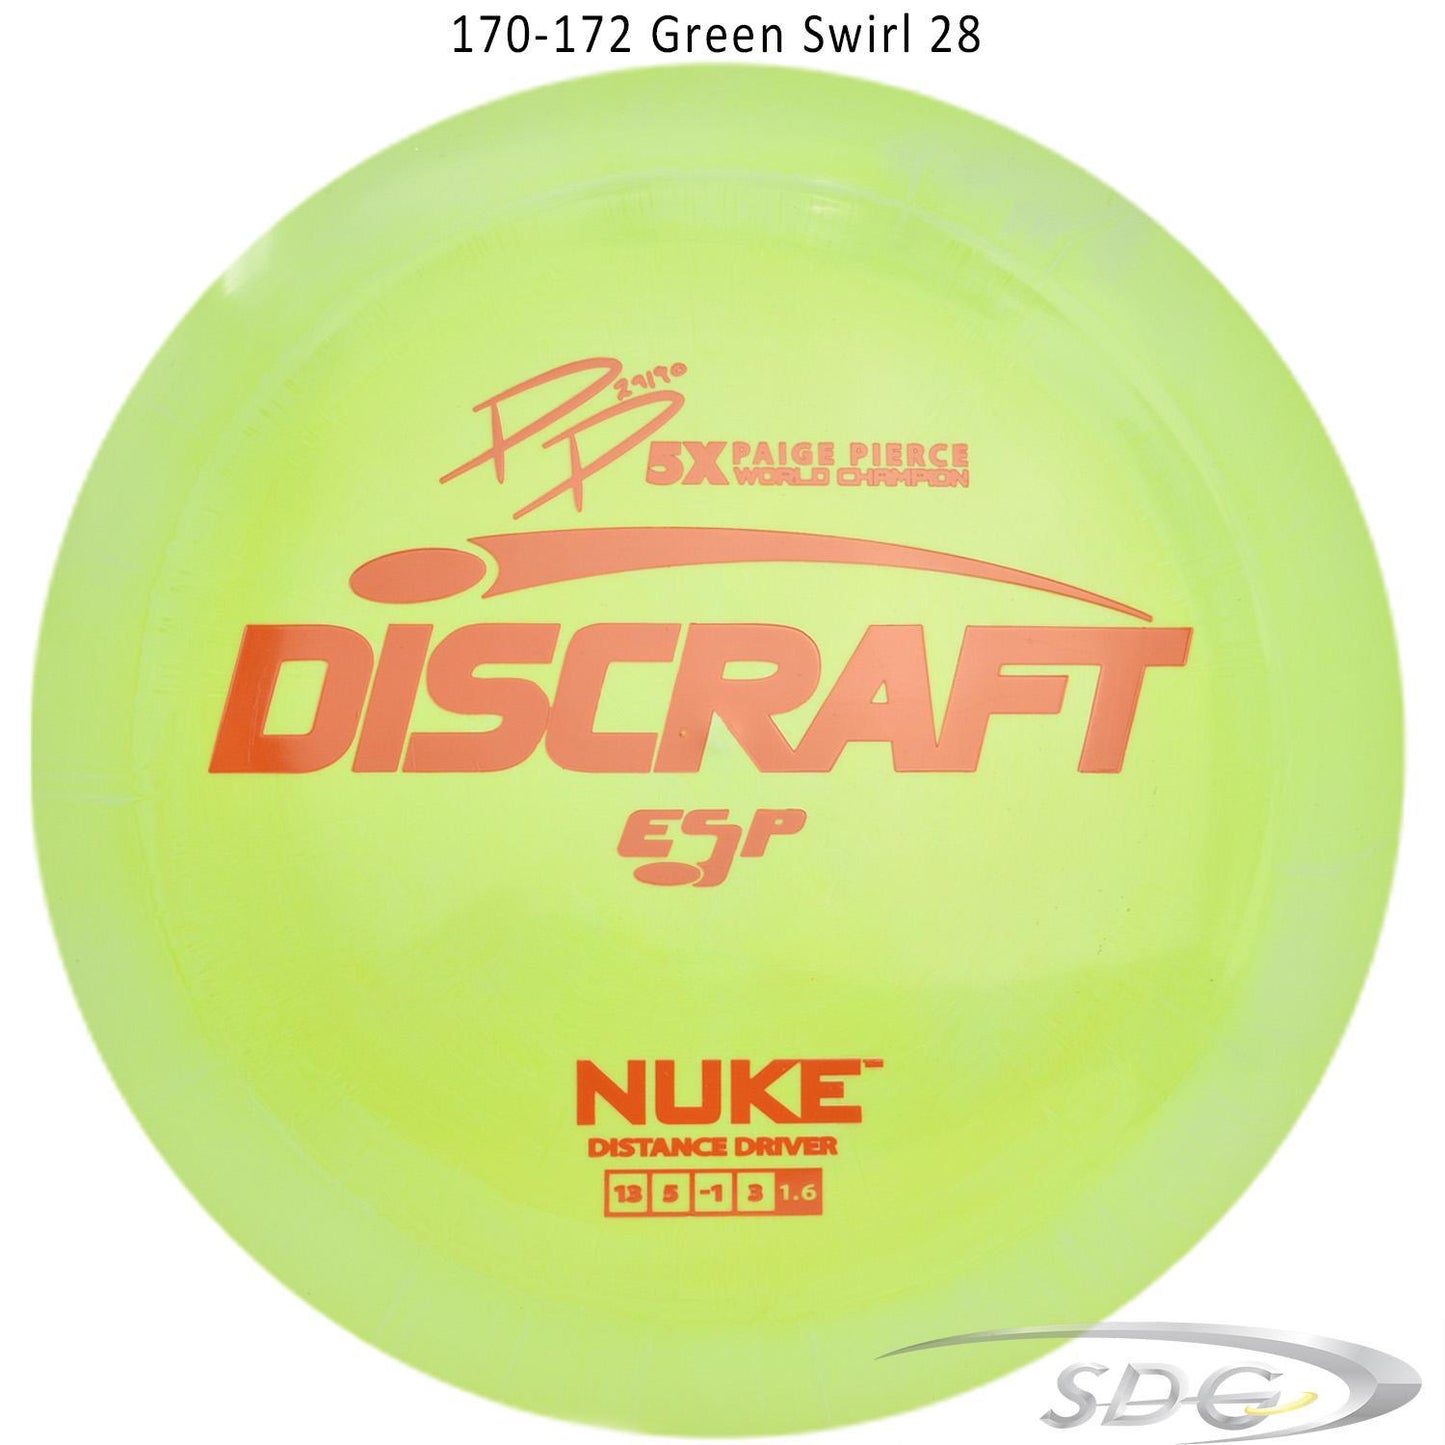 discraft-esp-nuke-paige-pierce-signature-disc-golf-distance-driver-172-170-weights 170-172 Green Swirl 28 